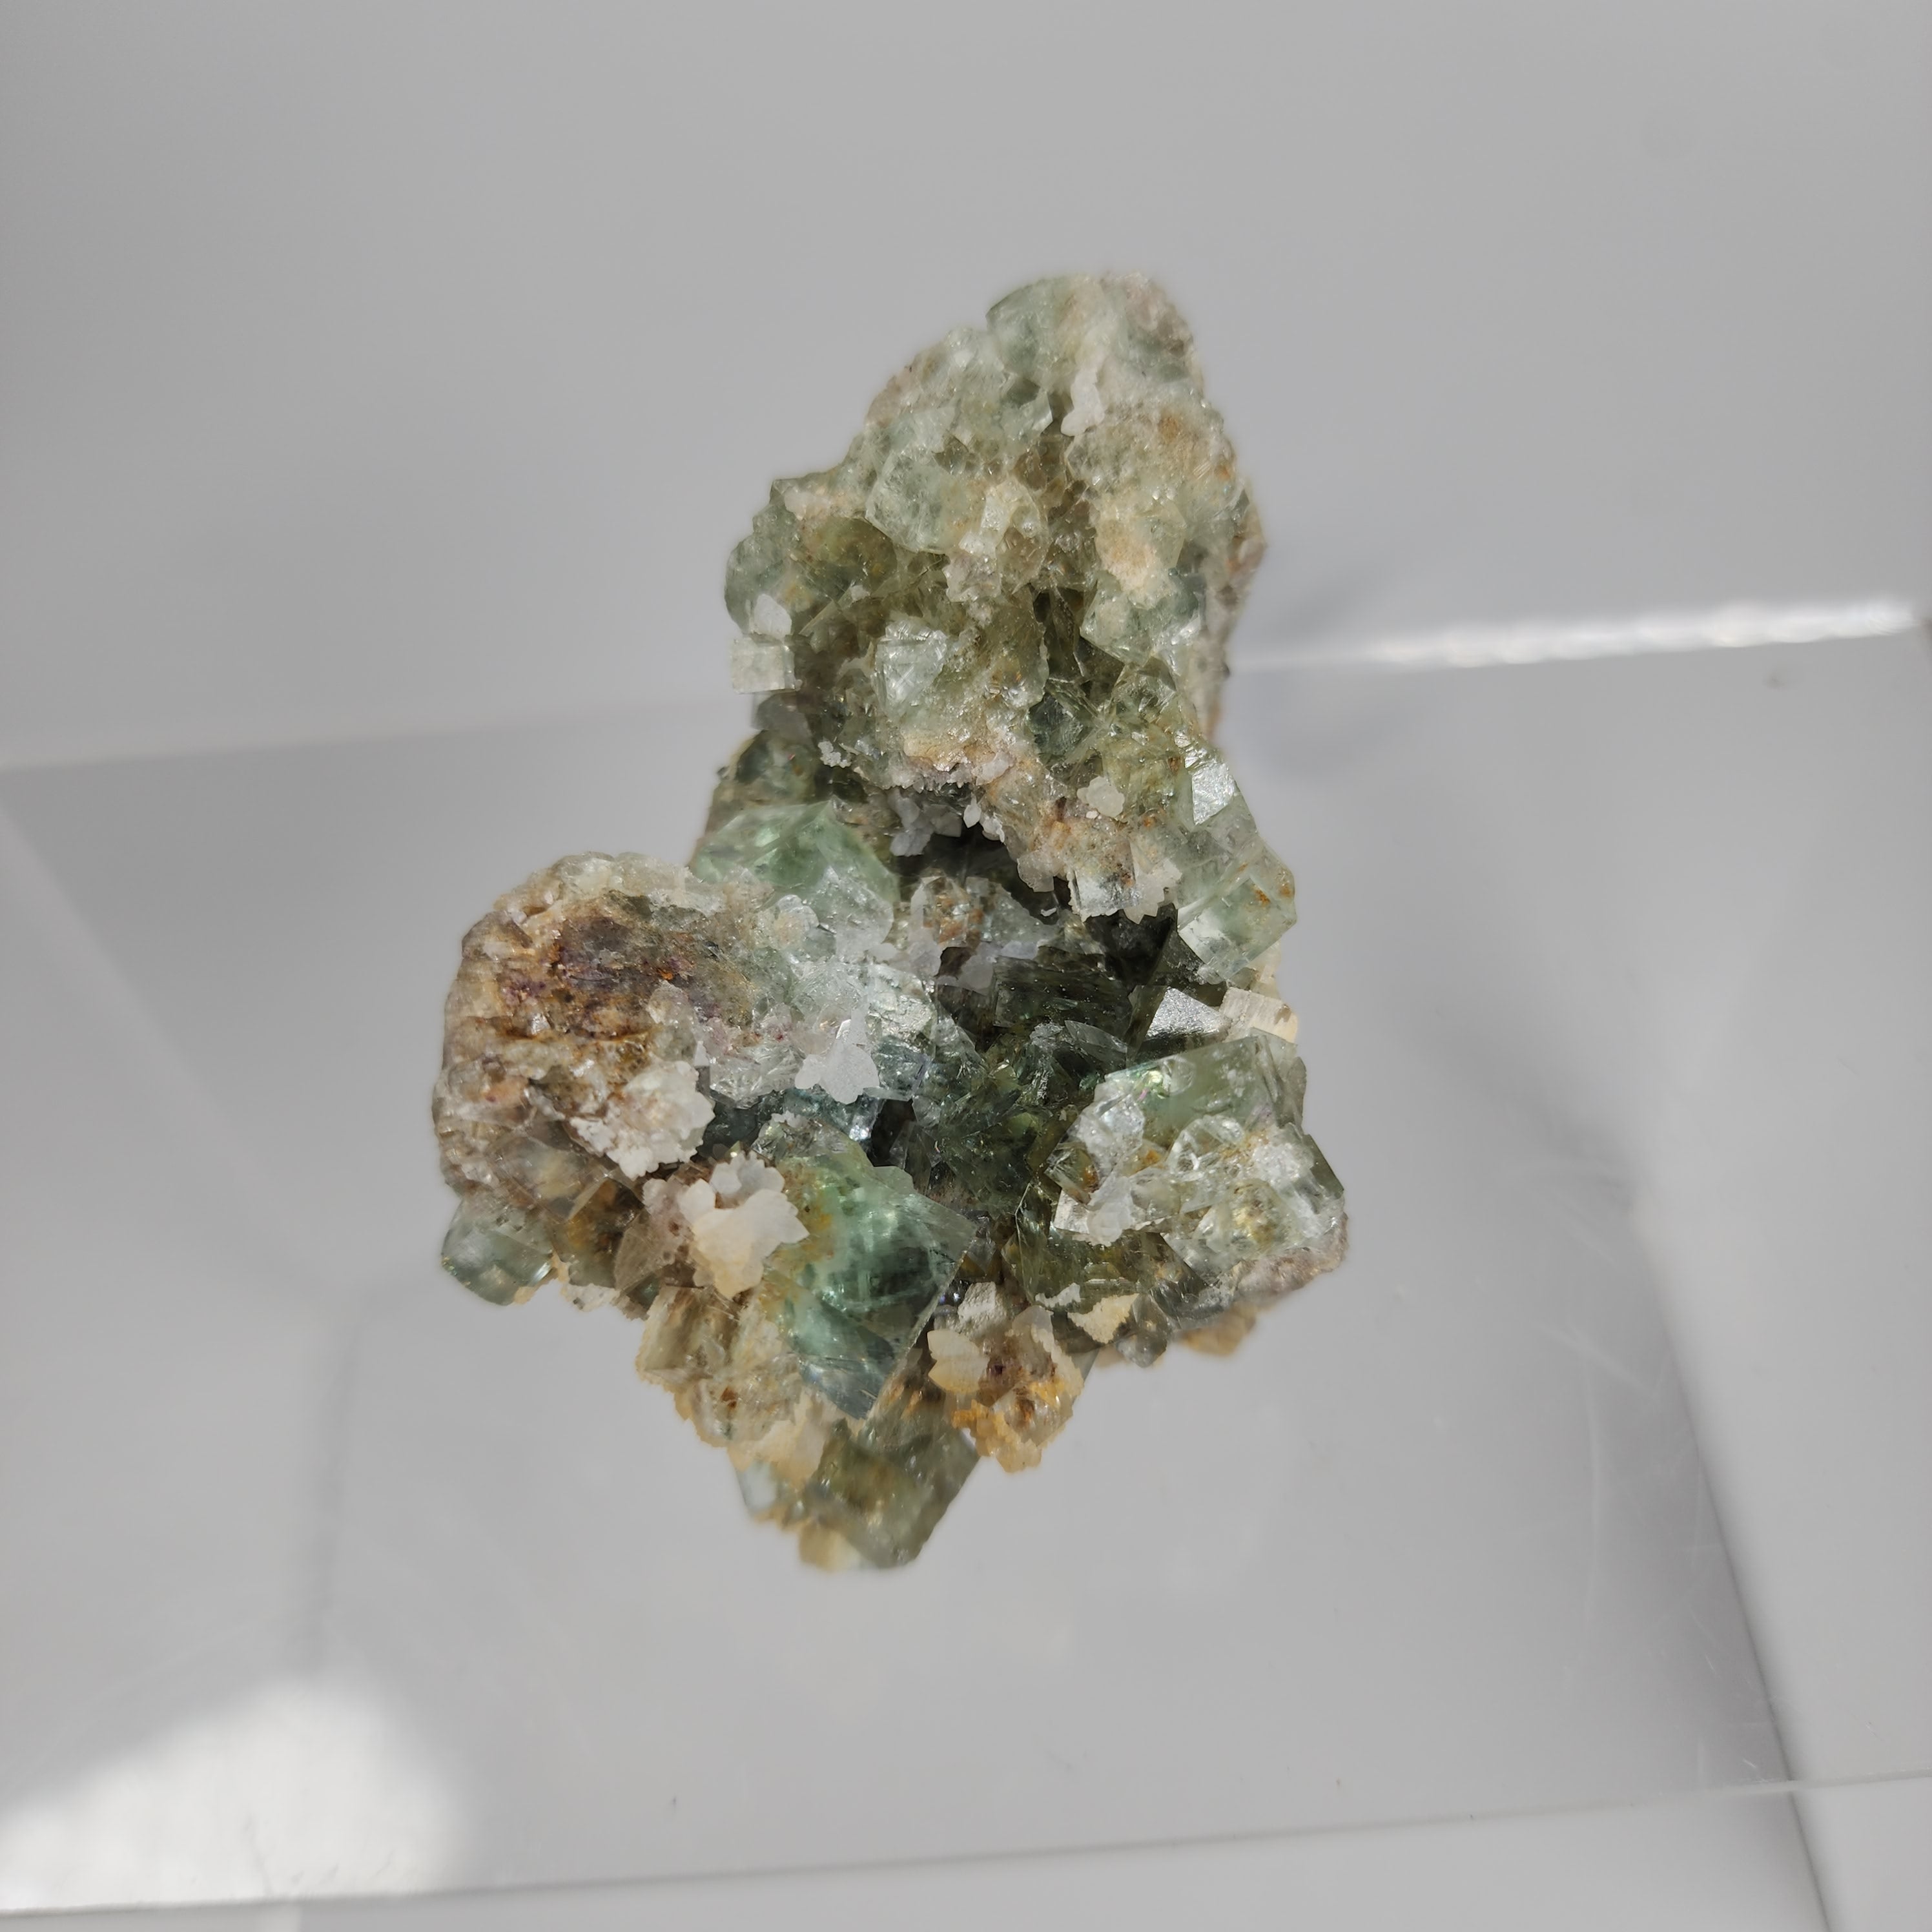 Okorusu Fluorite Specimen #2 from Okorusu Mine, Namibia